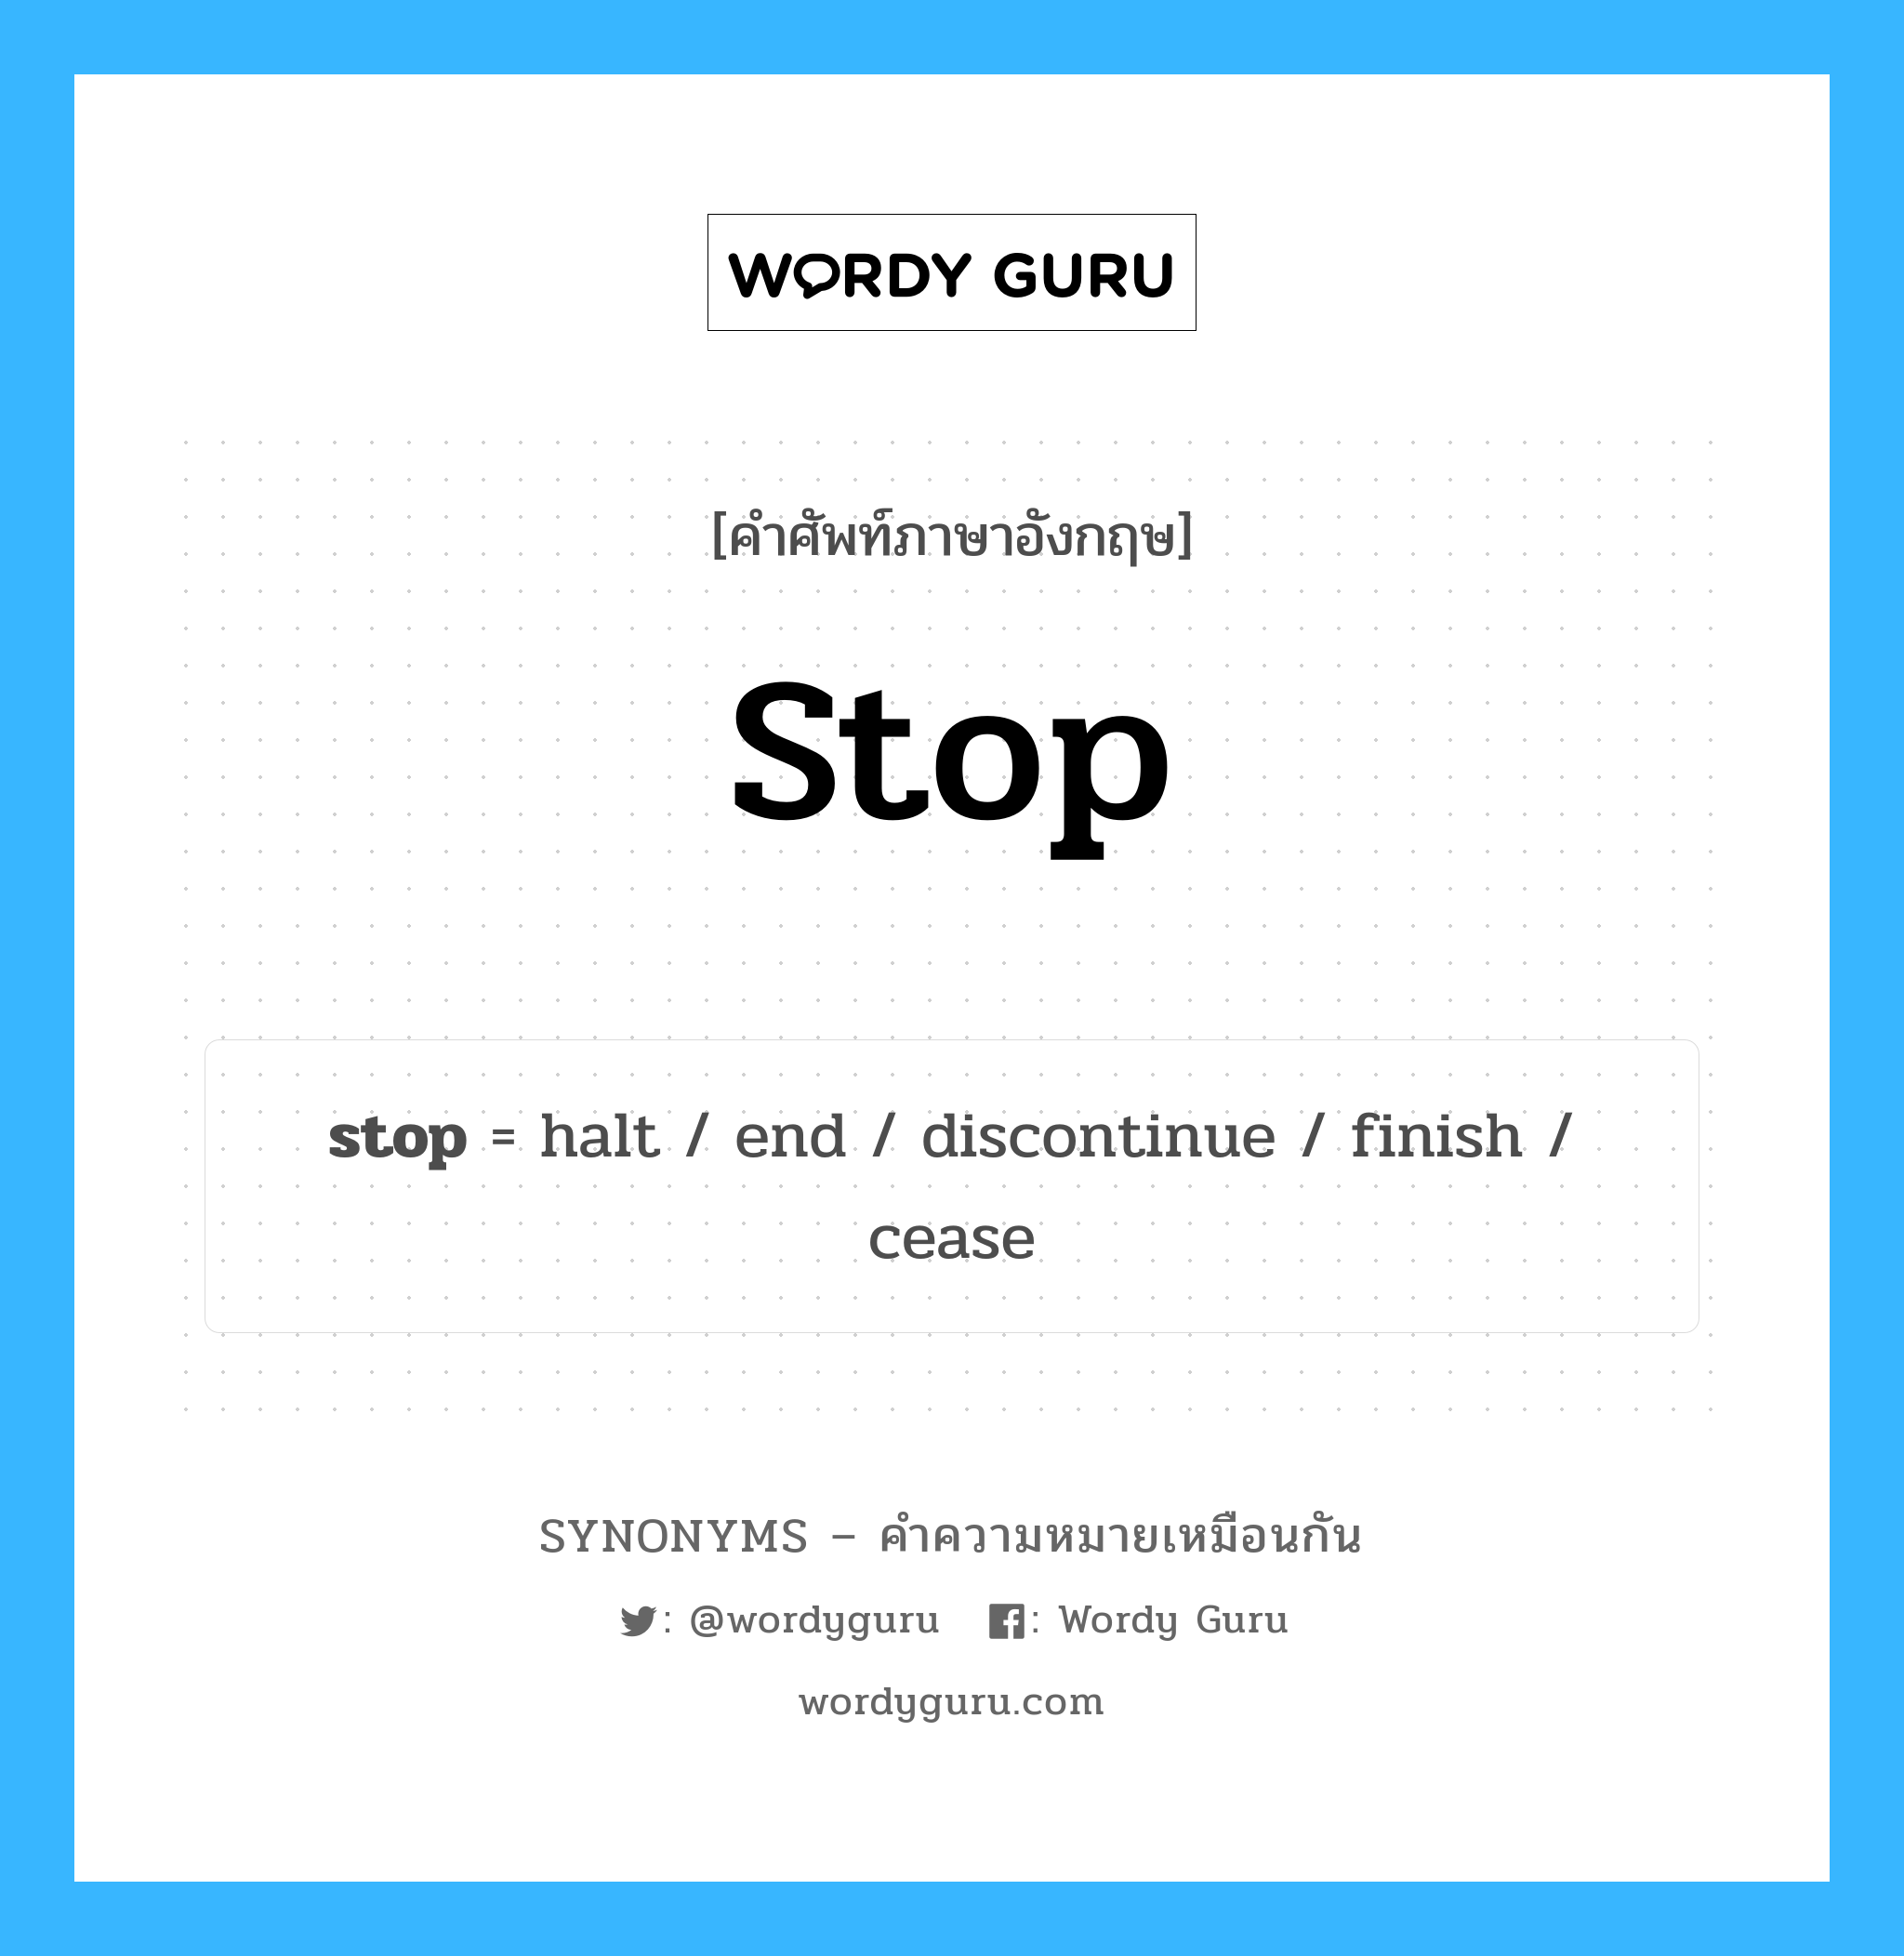 discontinue เป็นหนึ่งใน stop และมีคำอื่น ๆ อีกดังนี้, คำศัพท์ภาษาอังกฤษ discontinue ความหมายคล้ายกันกับ stop แปลว่า ยกเลิก หมวด stop